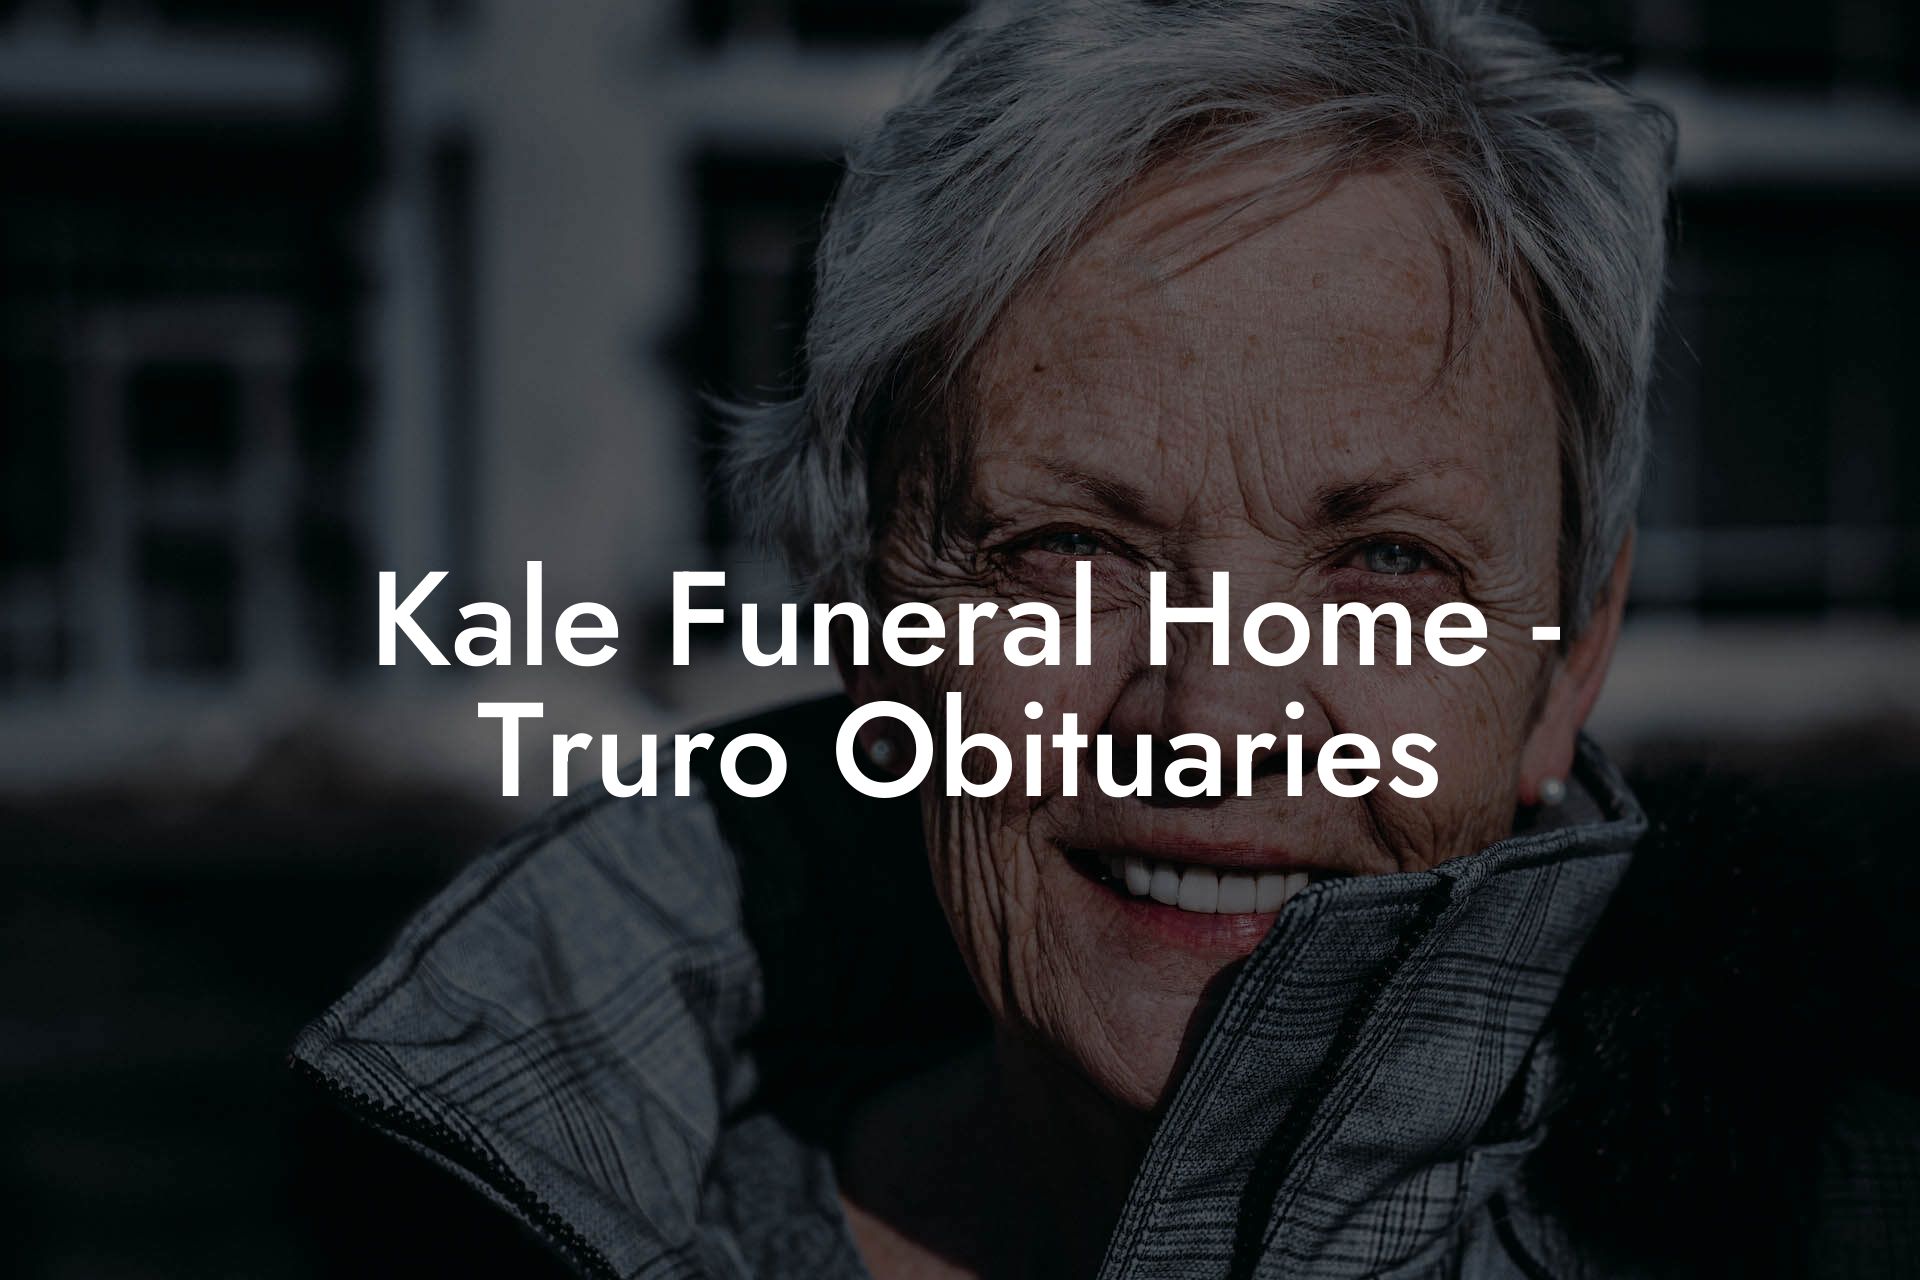 Kale Funeral Home - Truro Obituaries